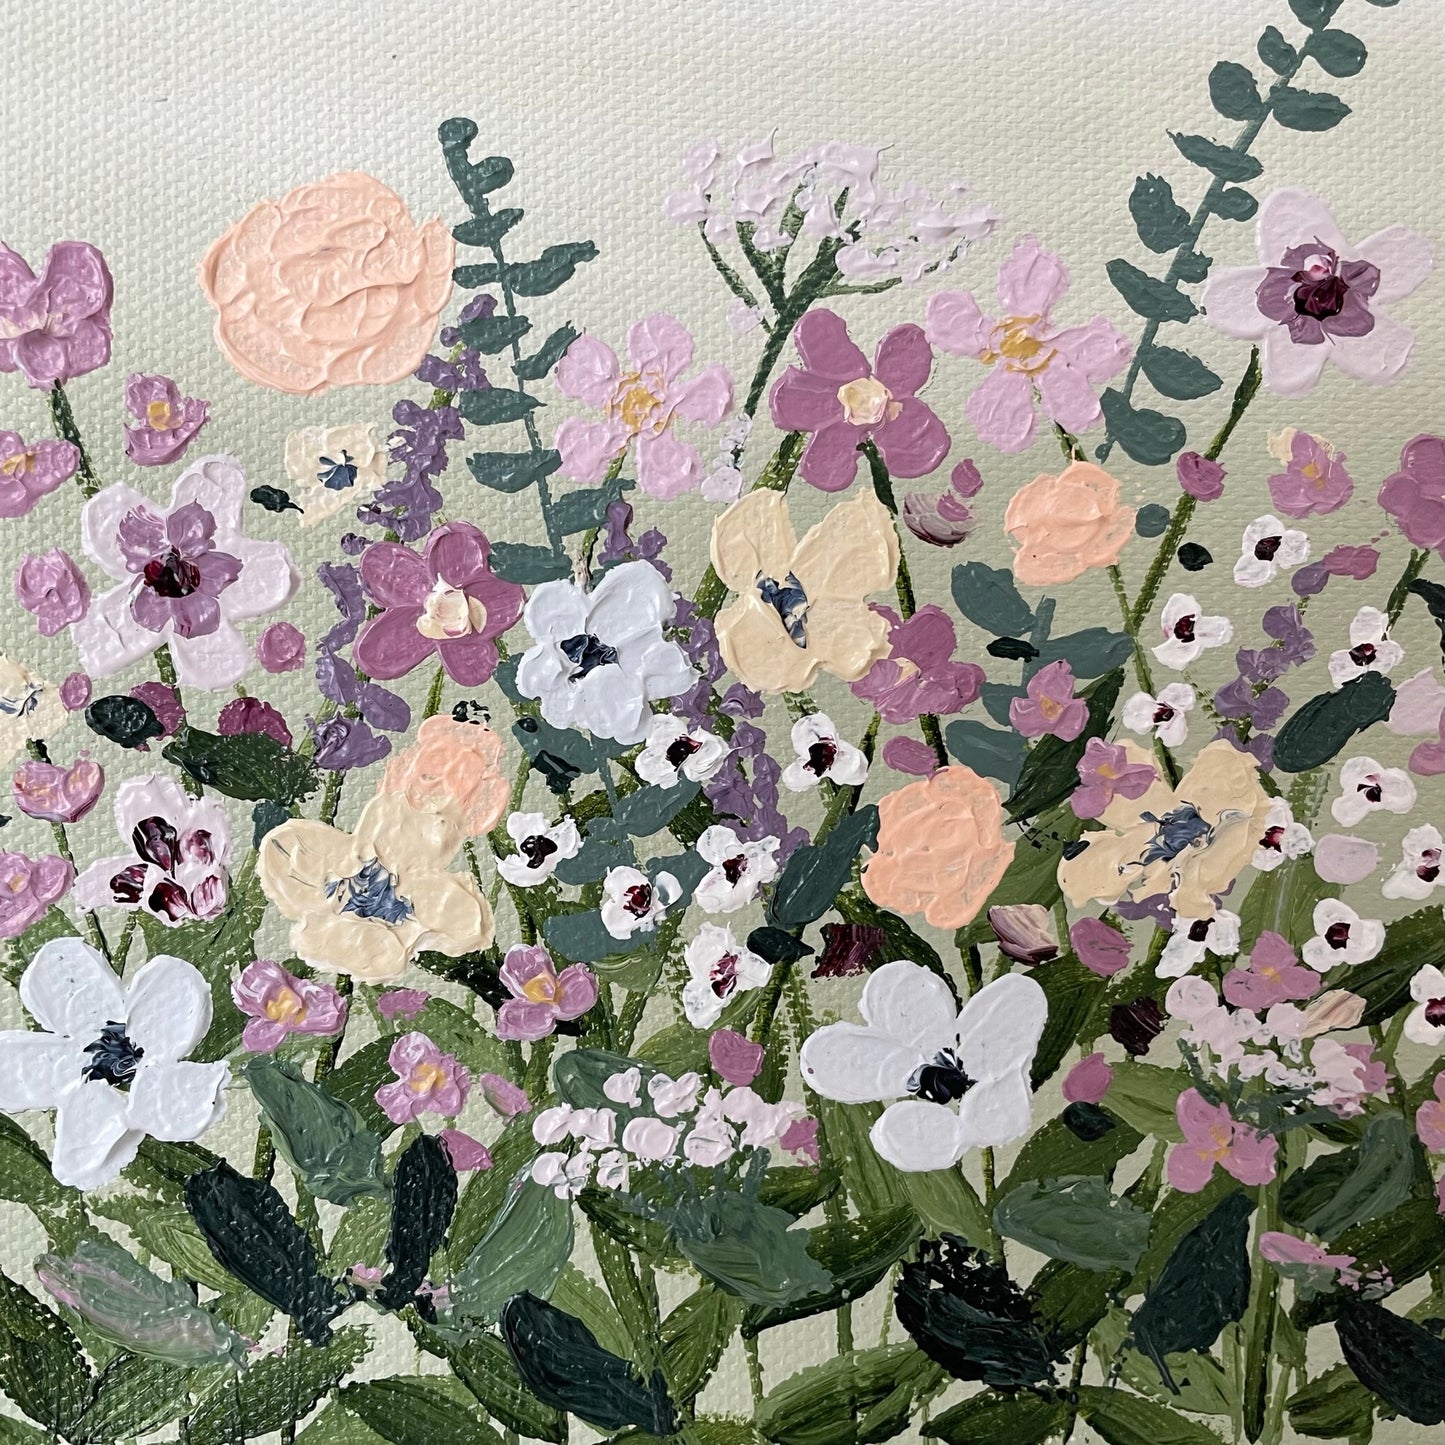 "Among the Wildflowers" acrylic painting